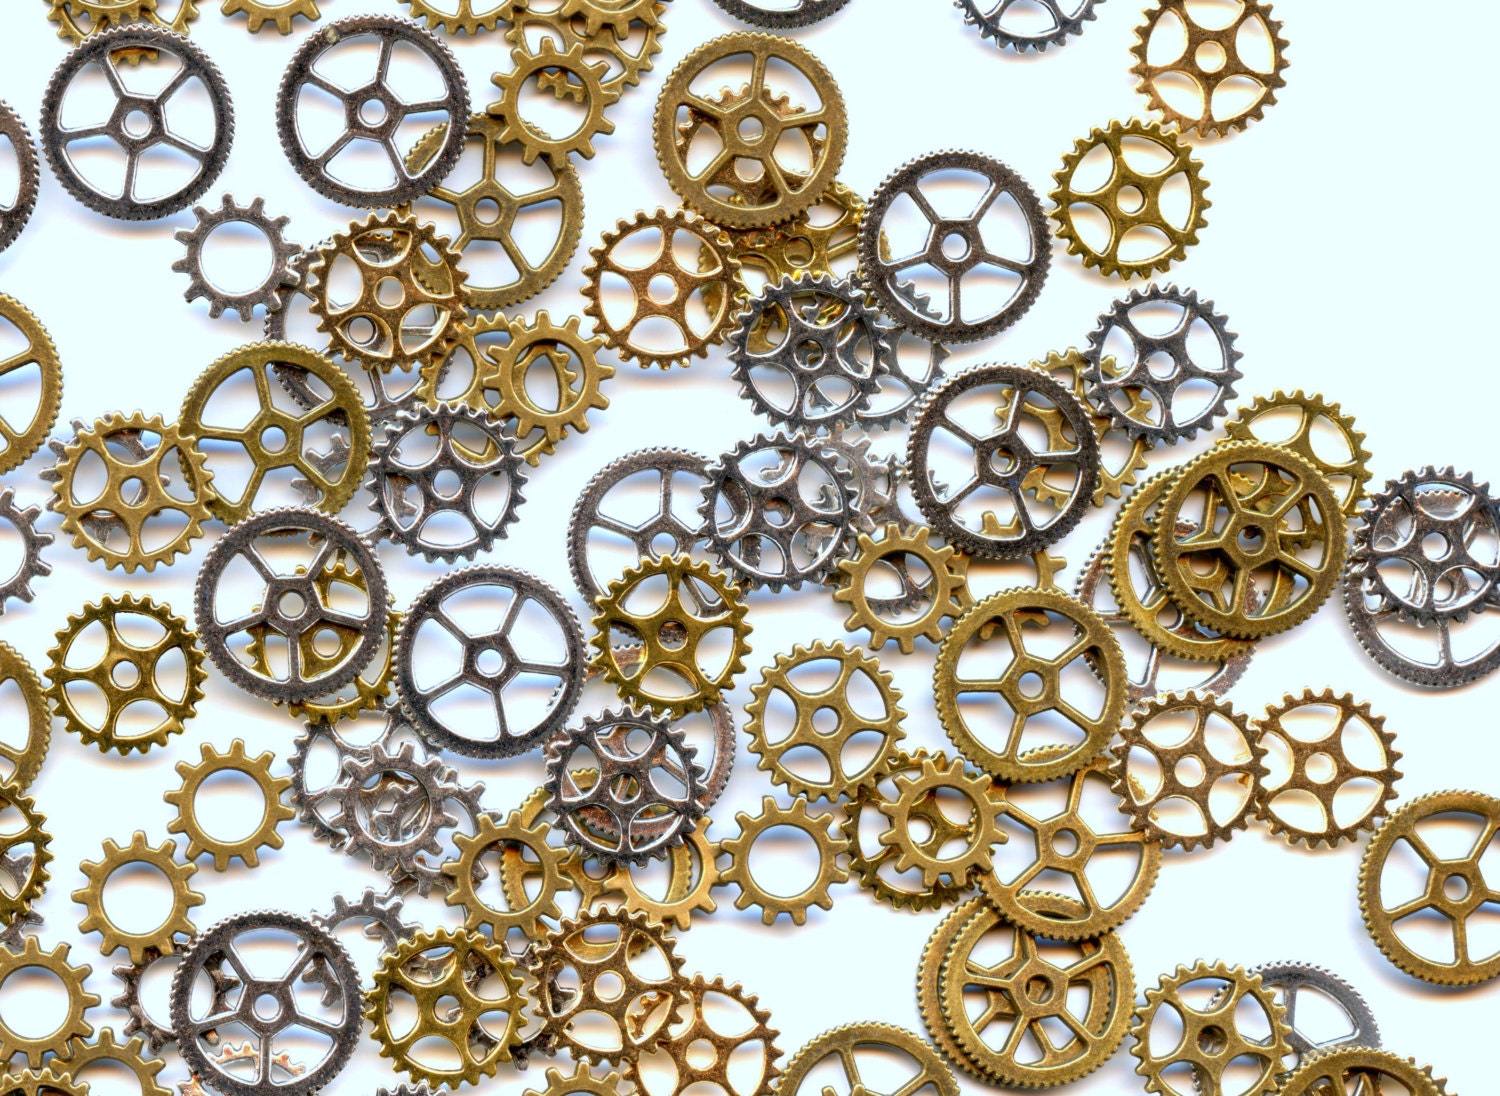 Steampunk Gears Galore Gear Charms 1oz 50-60 Pieces Mixture Assortment Mix Antique Bronze, Antique Gold, Silver, Gold Beautiful